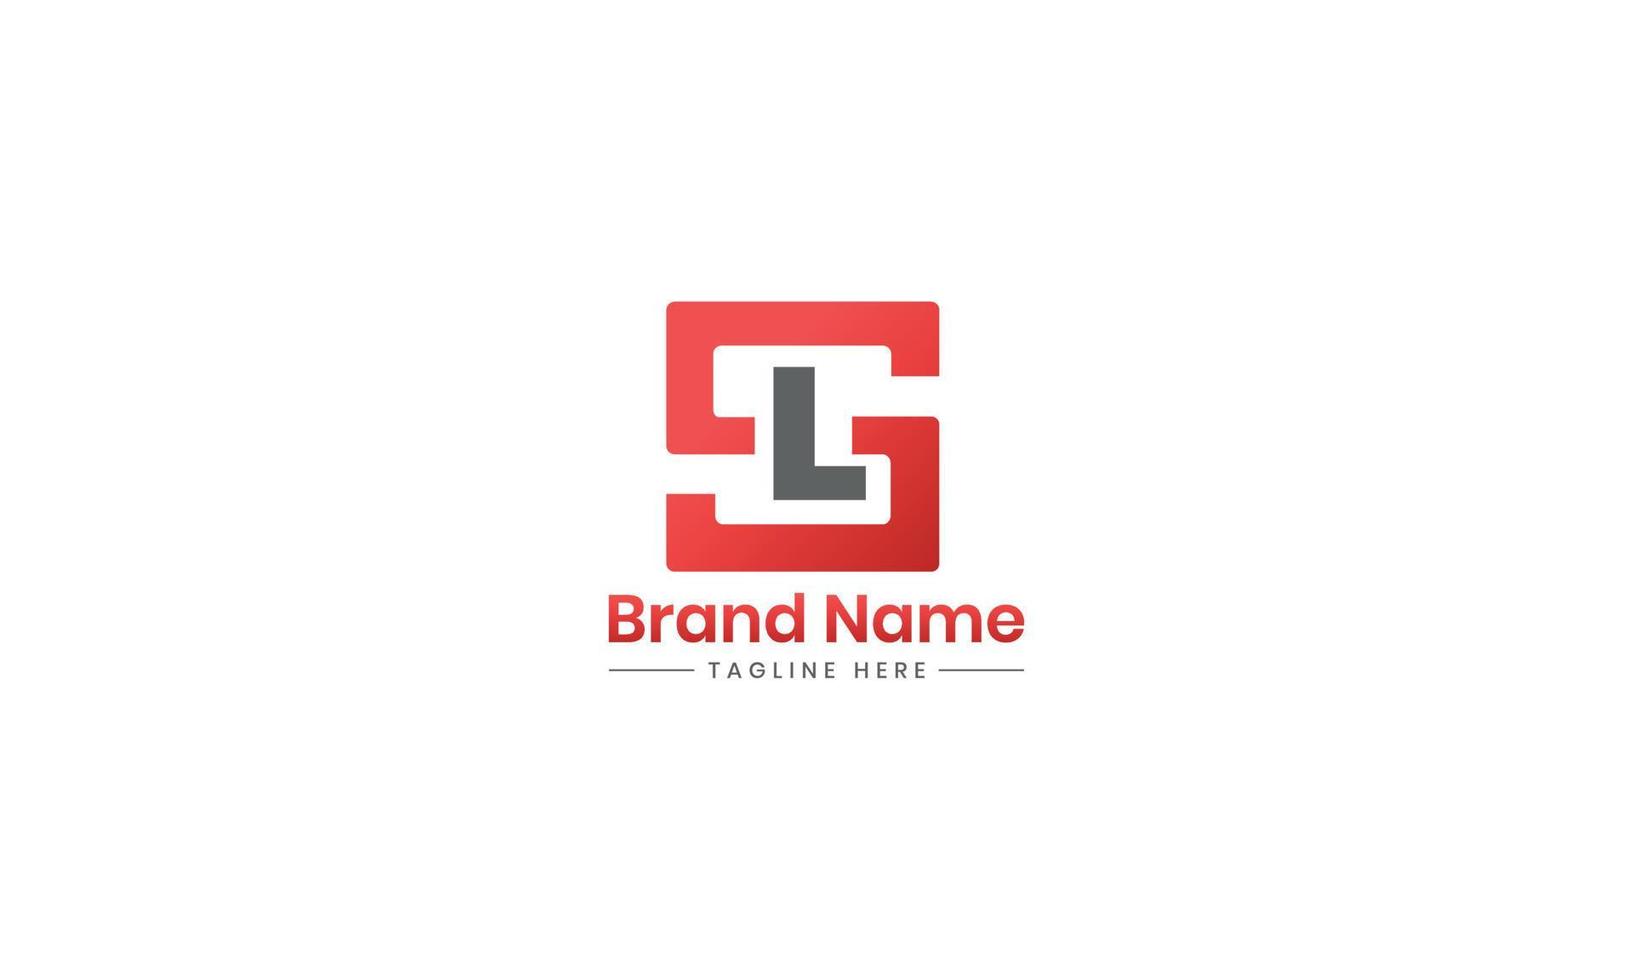 SL letter logo design. SL creative initials letter logo concept. SL letter design. Pro Vector